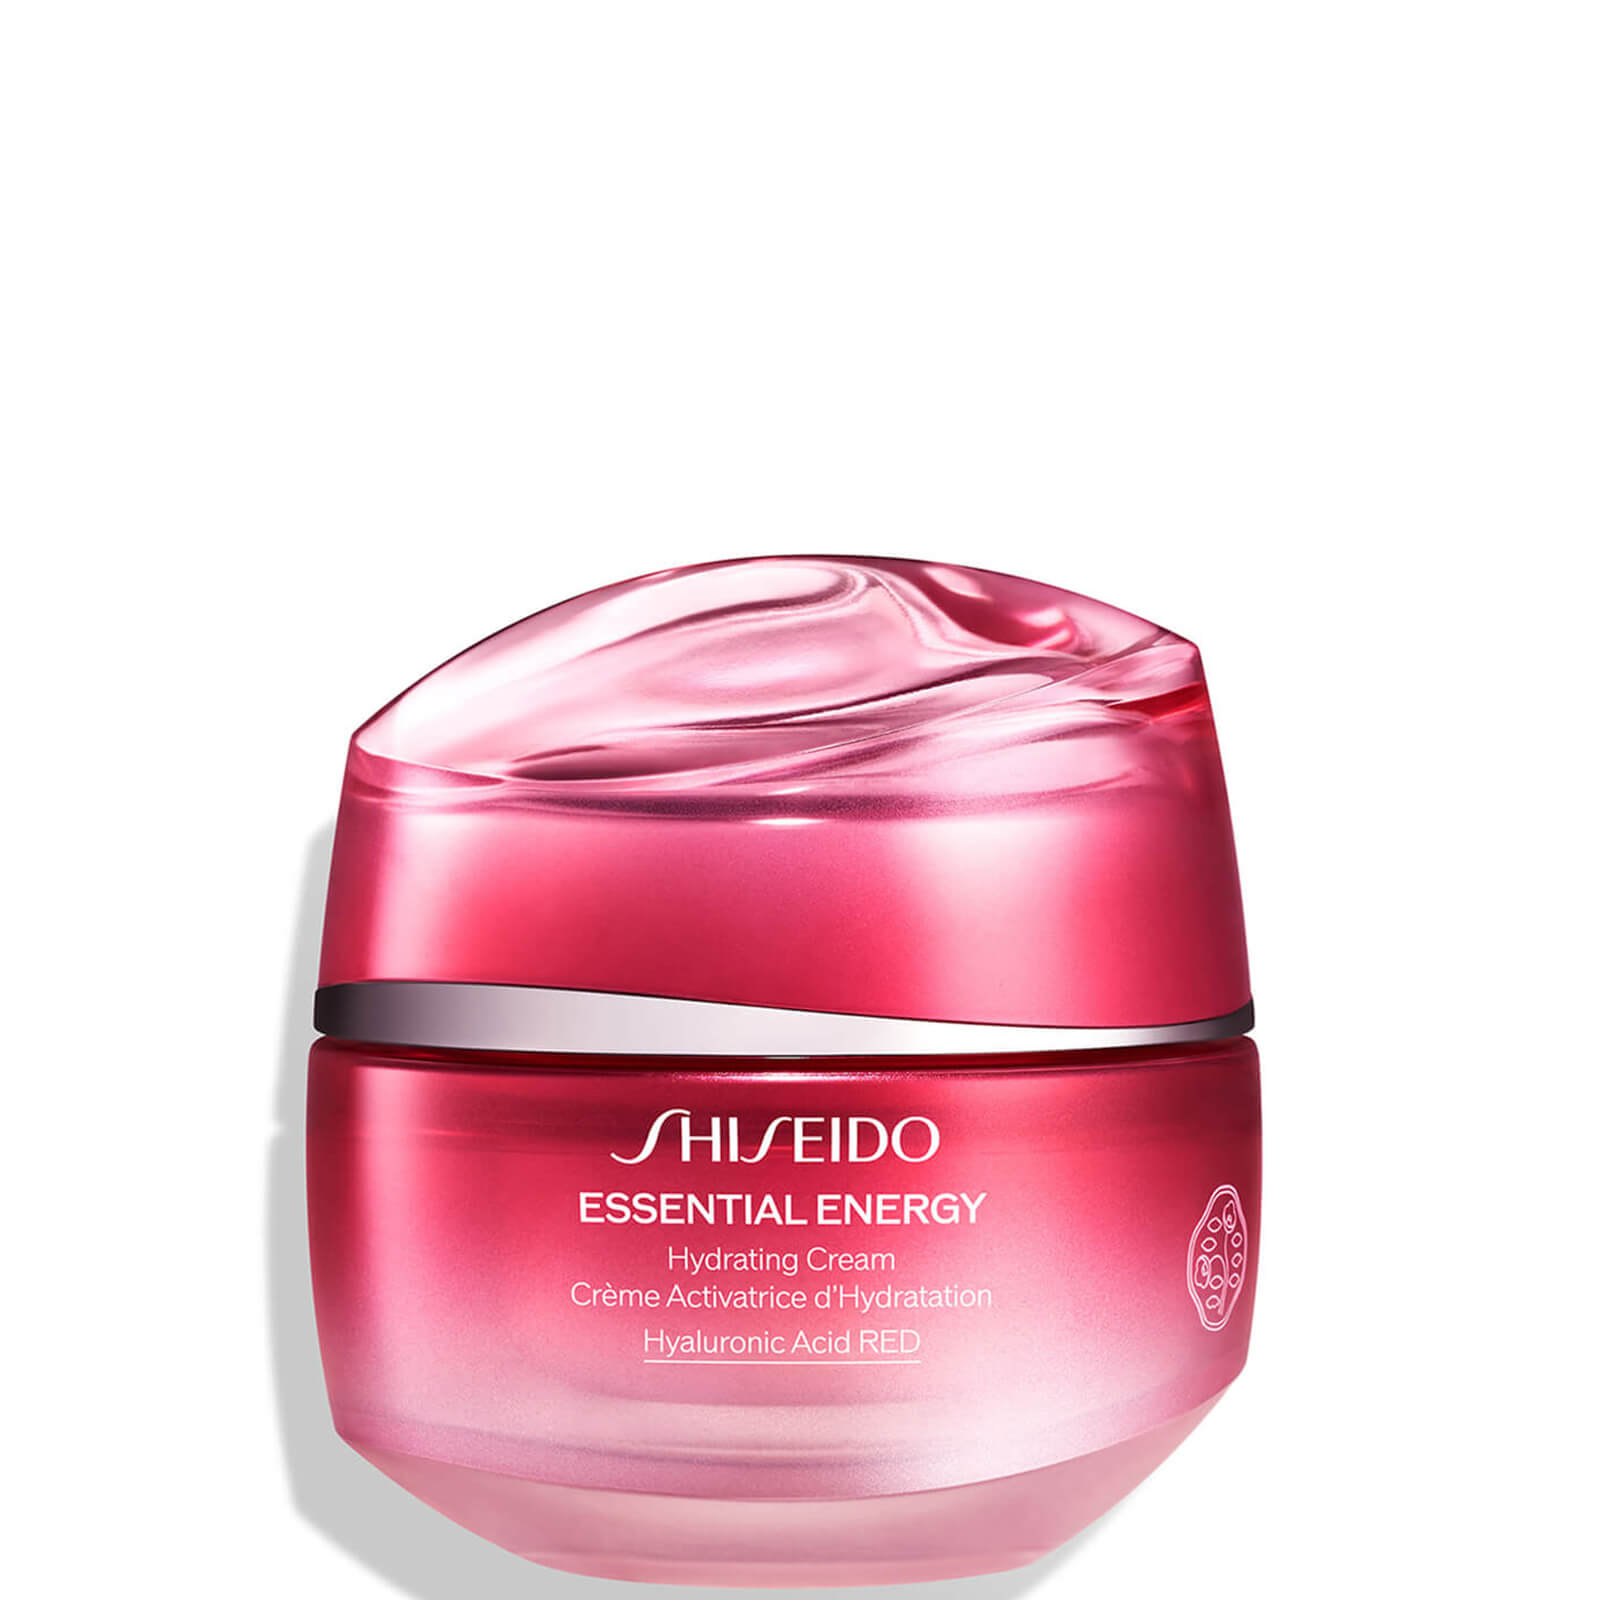 Image of Shiseido Essential Energy Hydrating Cream 50ml